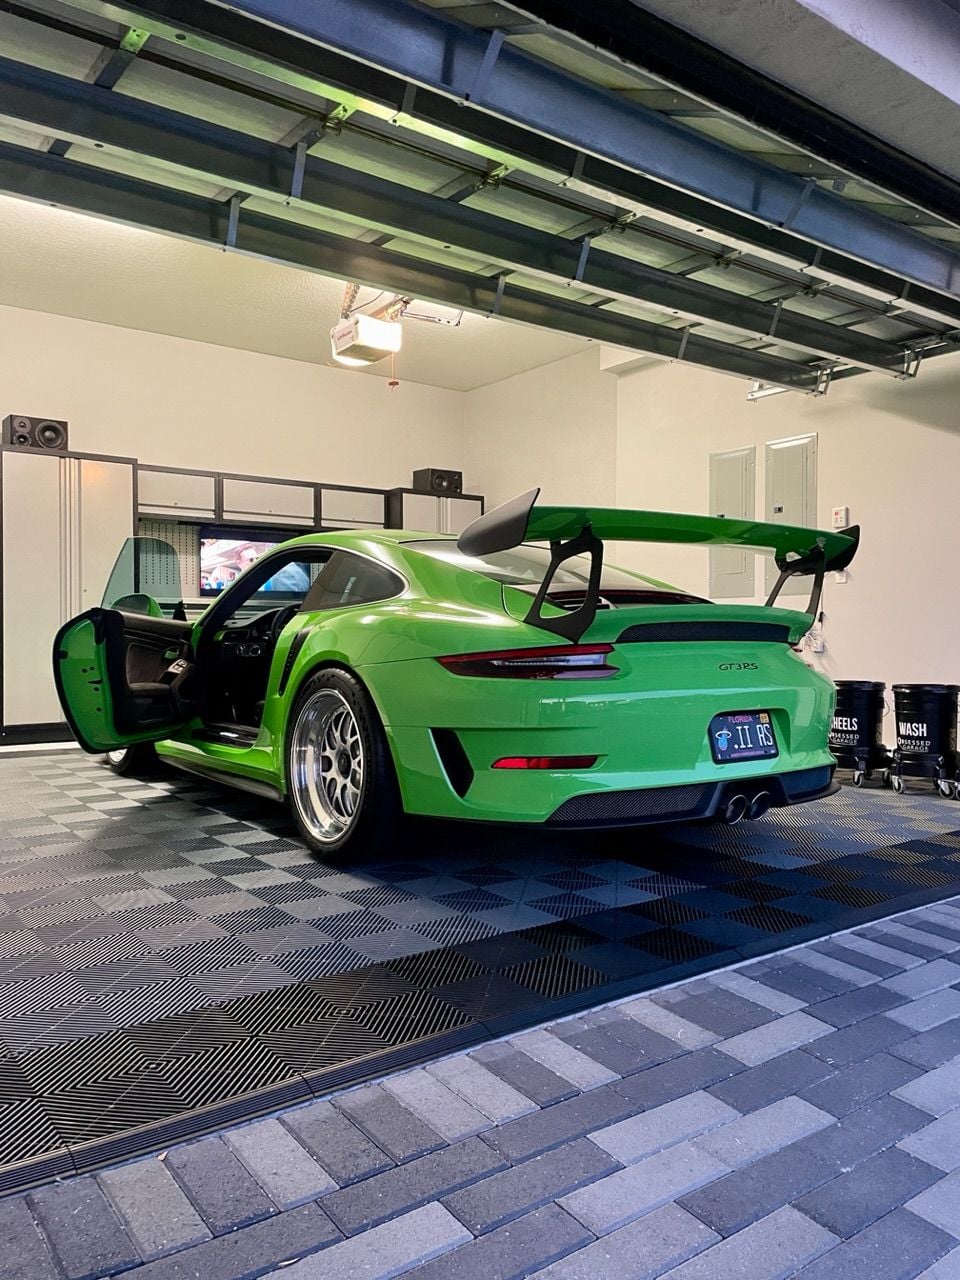 2019 Porsche GT3 - 2019 Lizard GT3 RS, CPO, 5957 Miles - Used - VIN WP0AF2A92KS165213 - 5,957 Miles - 6 cyl - 2WD - Parkland, FL 33076, United States